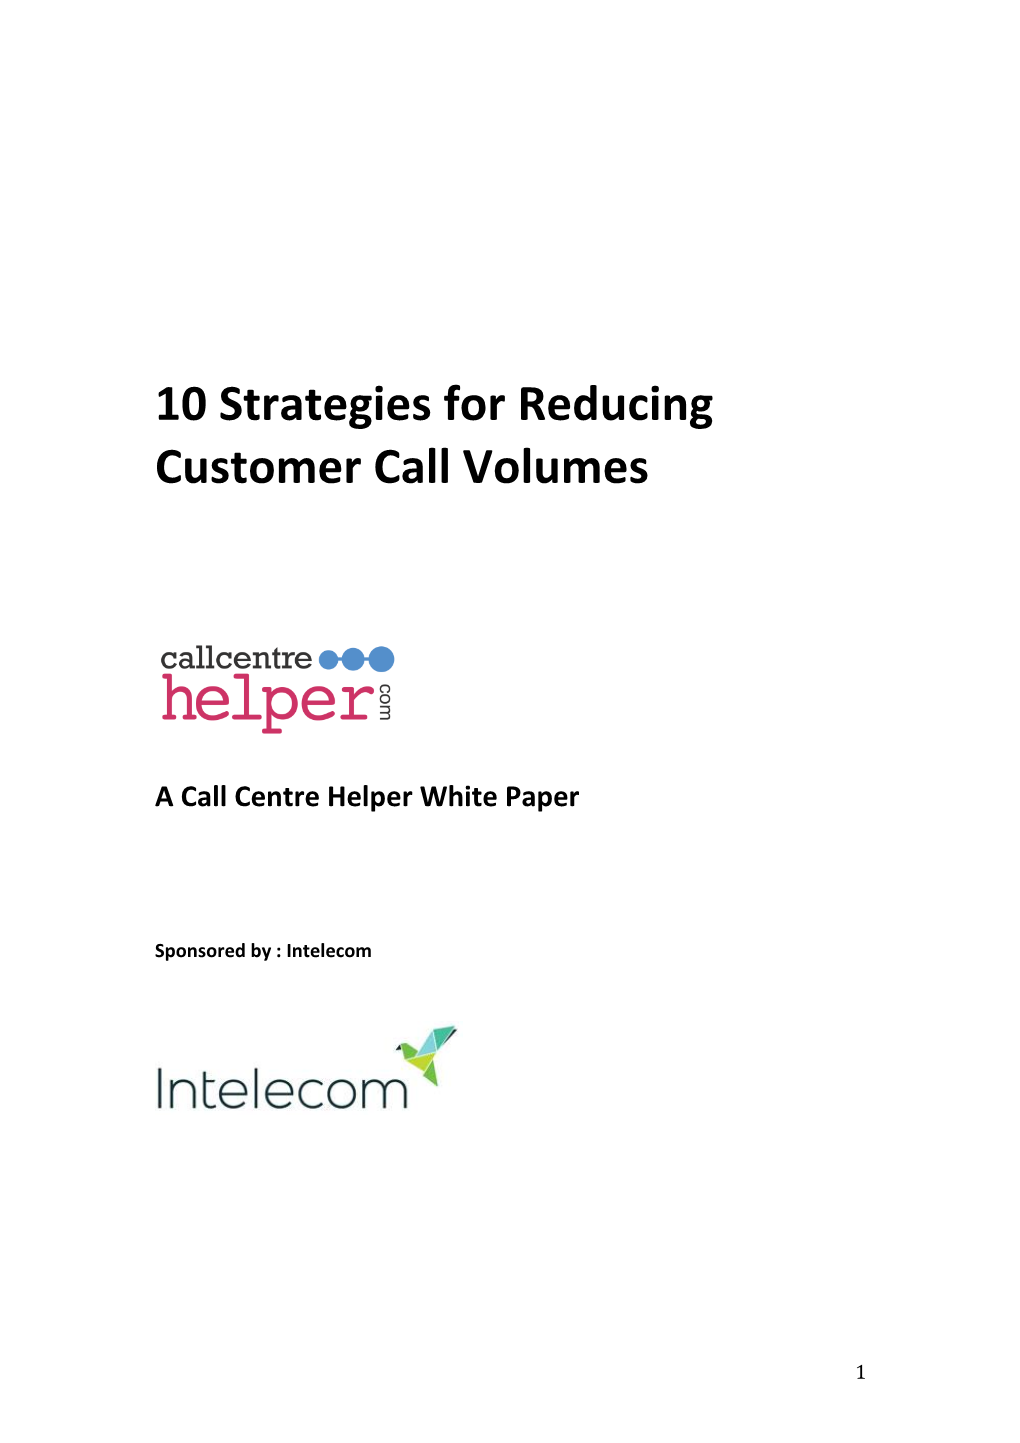 10 Strategies for Reducing Customer Call Volumes